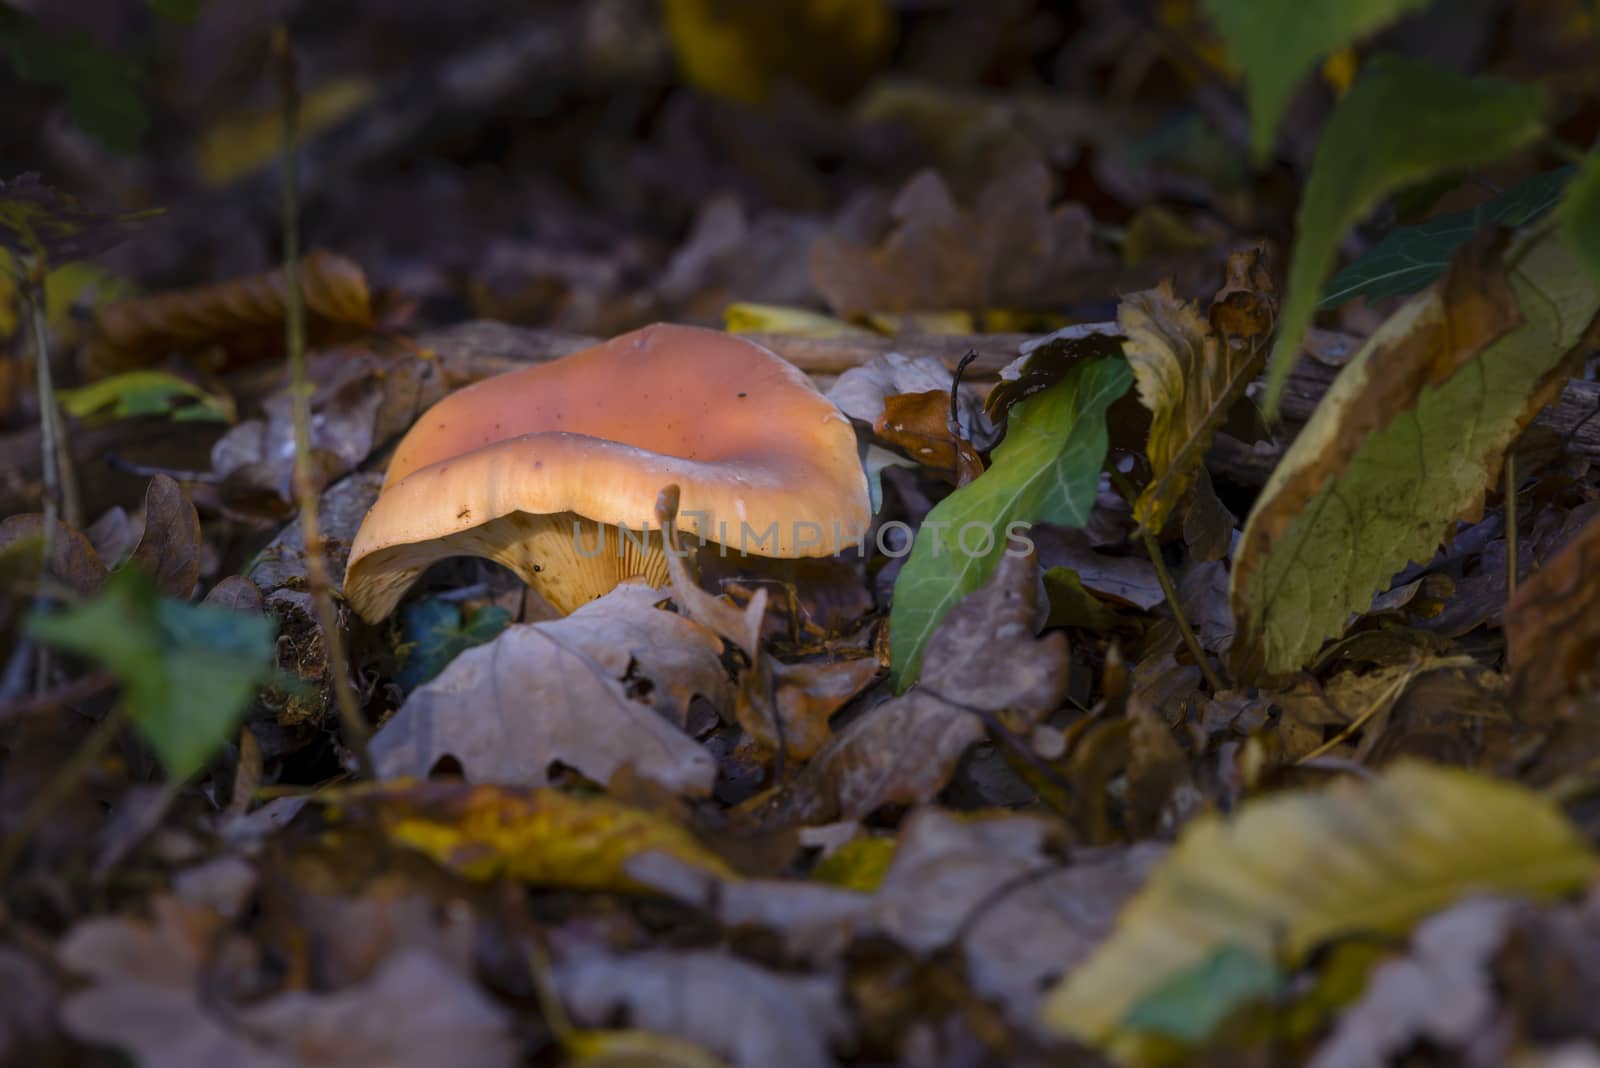 Mushroom in autumn foliage by asafaric